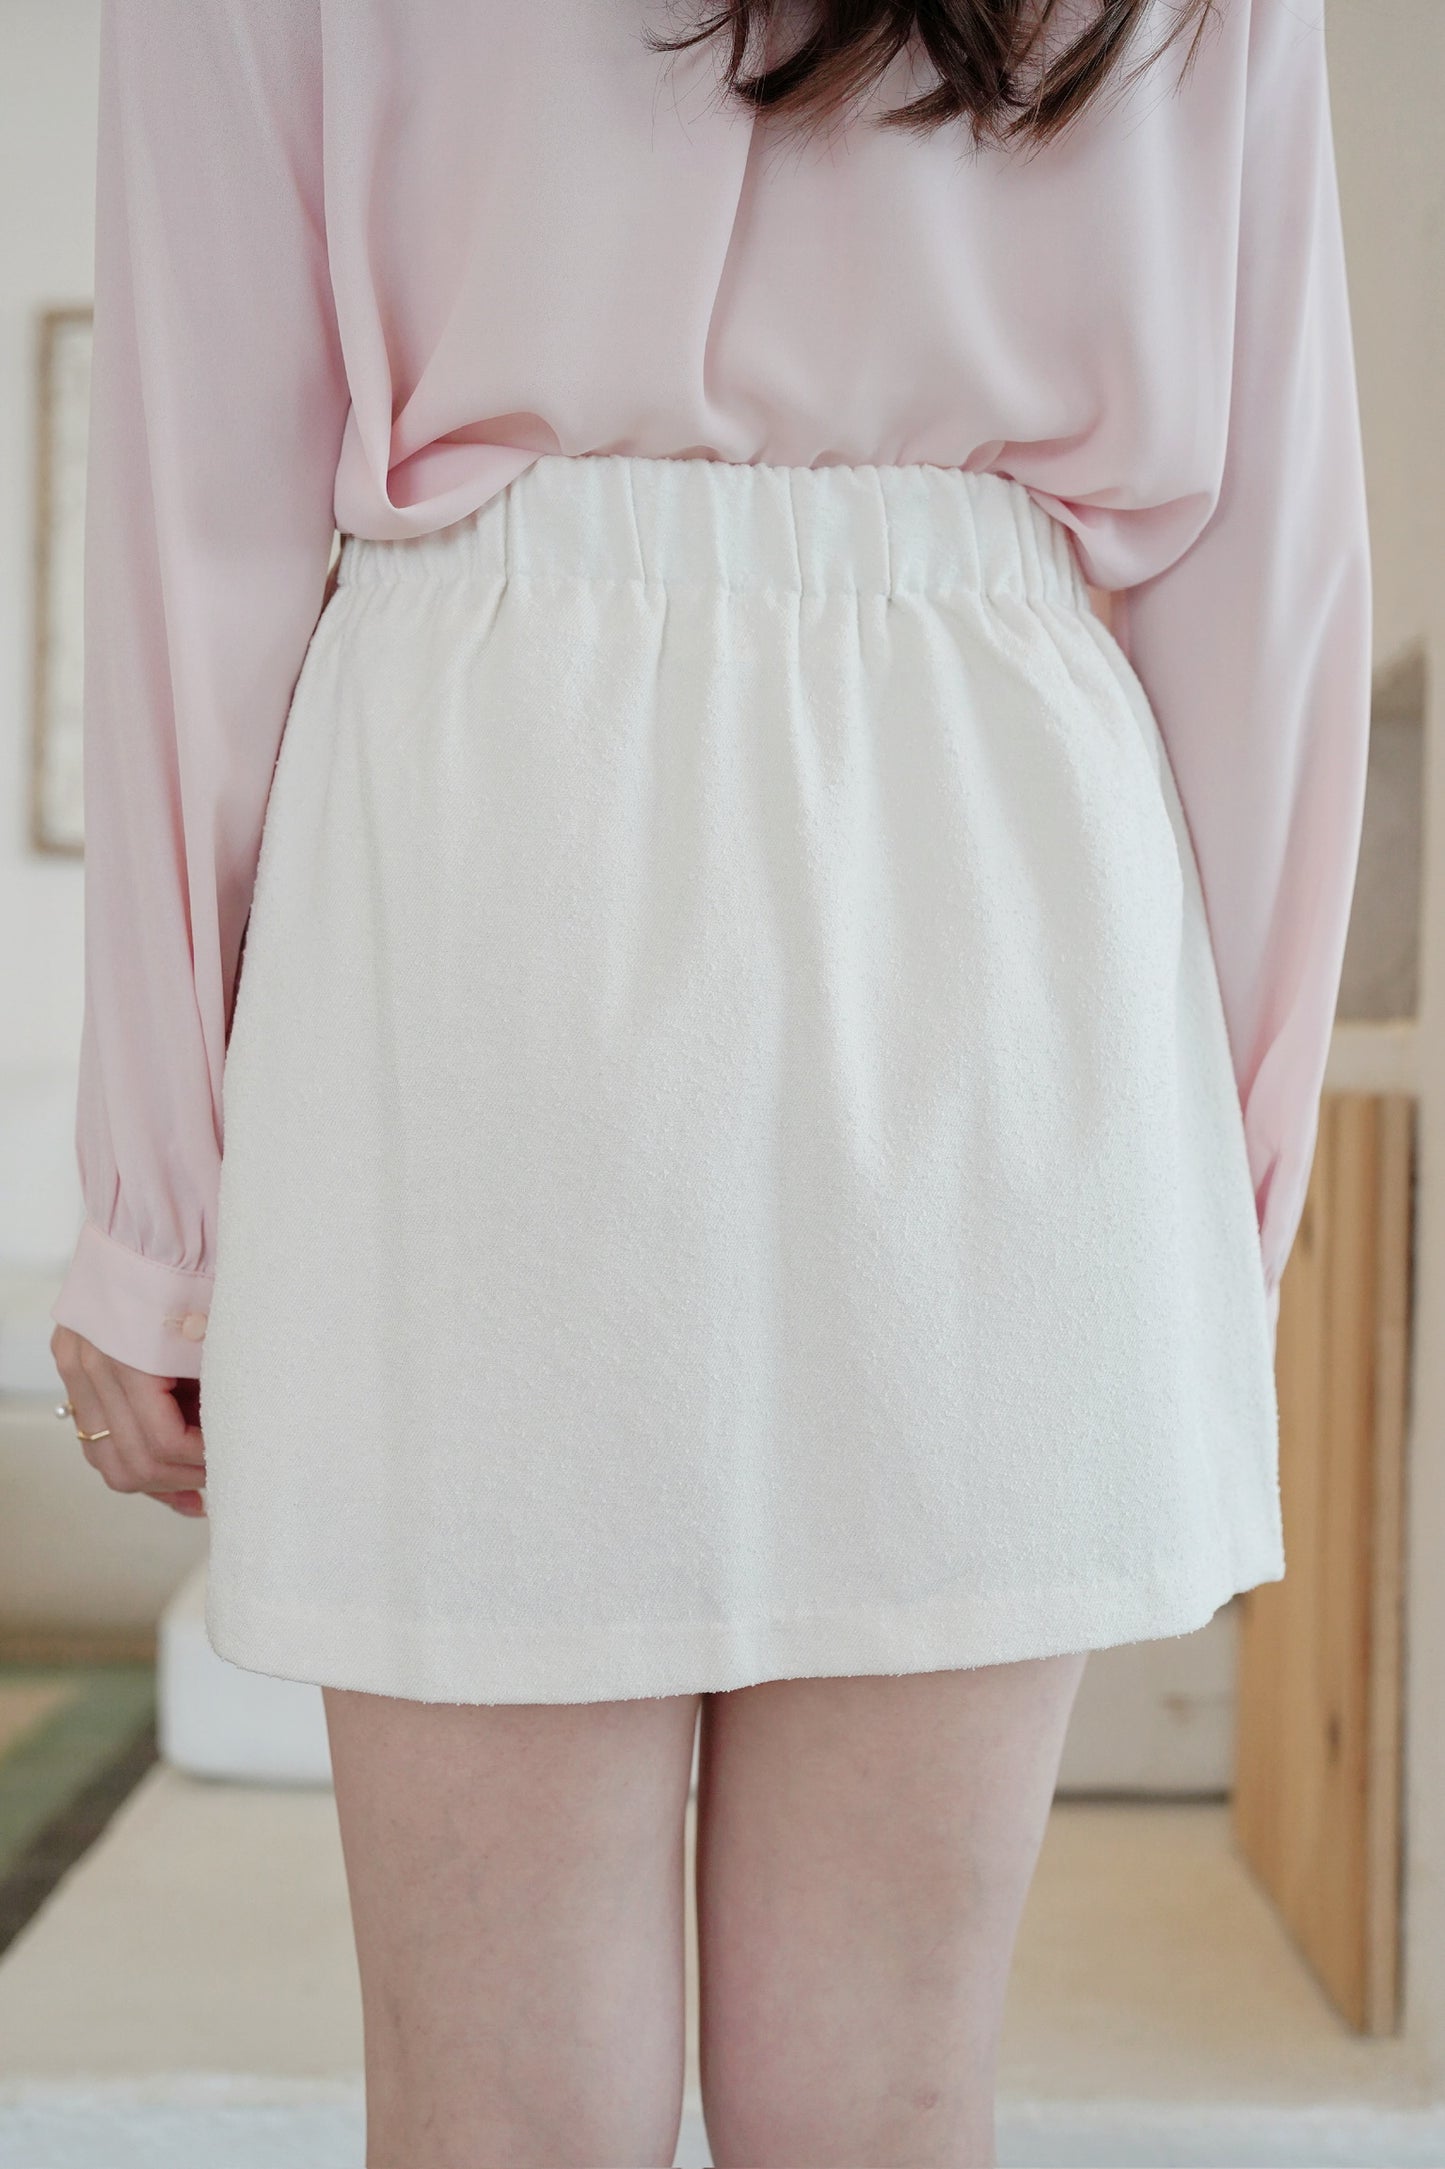 The Chic Pastel Skirt